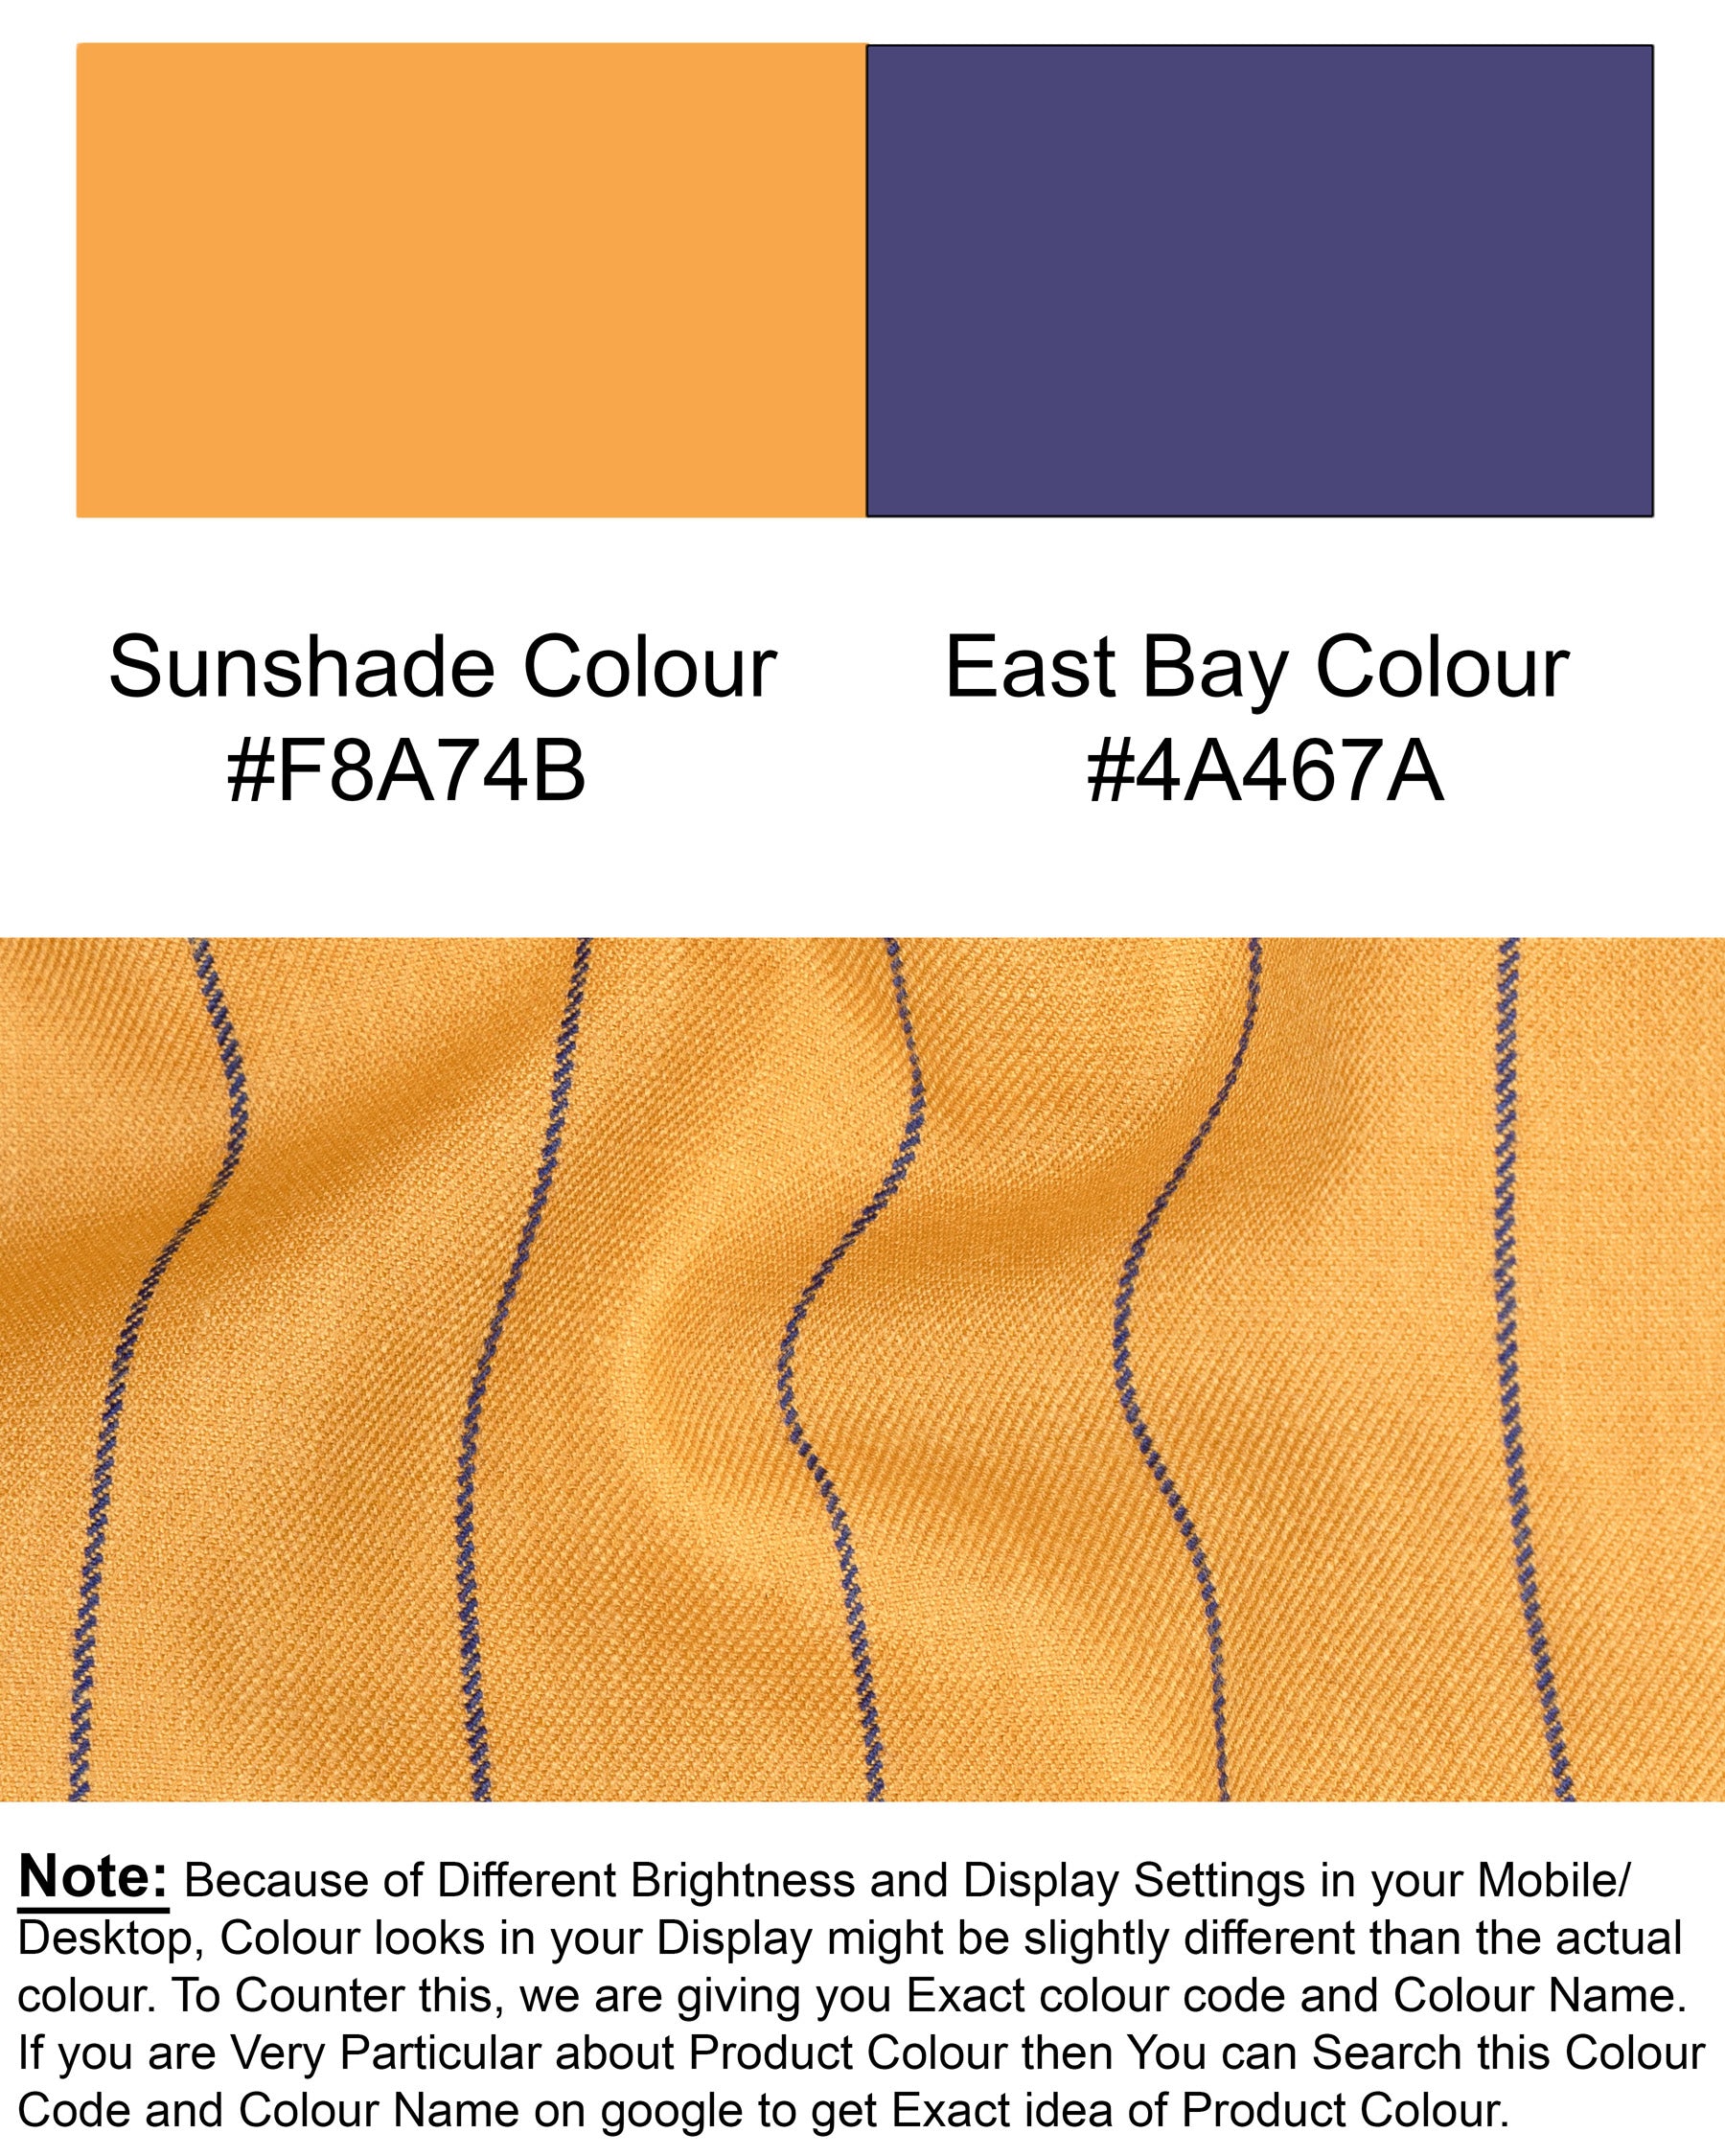 Sunshade Orange Striped Wool Rich DouSTe Breasted Suit ST1509-DB-36, ST1509-DB-38, ST1509-DB-40, ST1509-DB-42, ST1509-DB-44, ST1509-DB-46, ST1509-DB-48, ST1509-DB-50, ST1509-DB-52, ST1509-DB-54, ST1509-DB-56, ST1509-DB-58, ST1509-DB-60